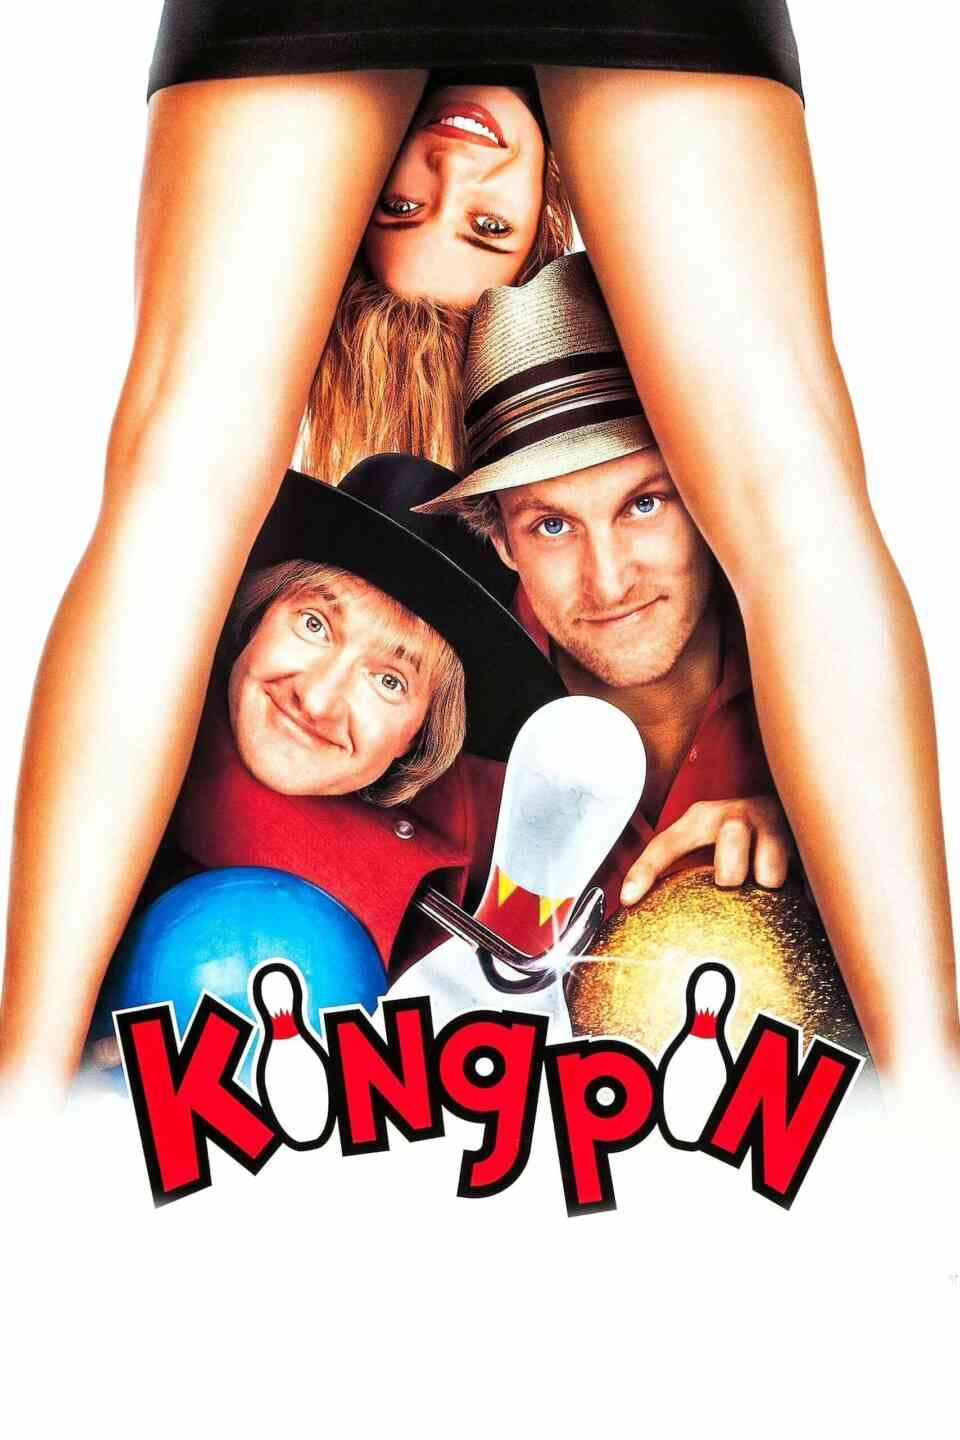 Read Kingpin screenplay (poster)